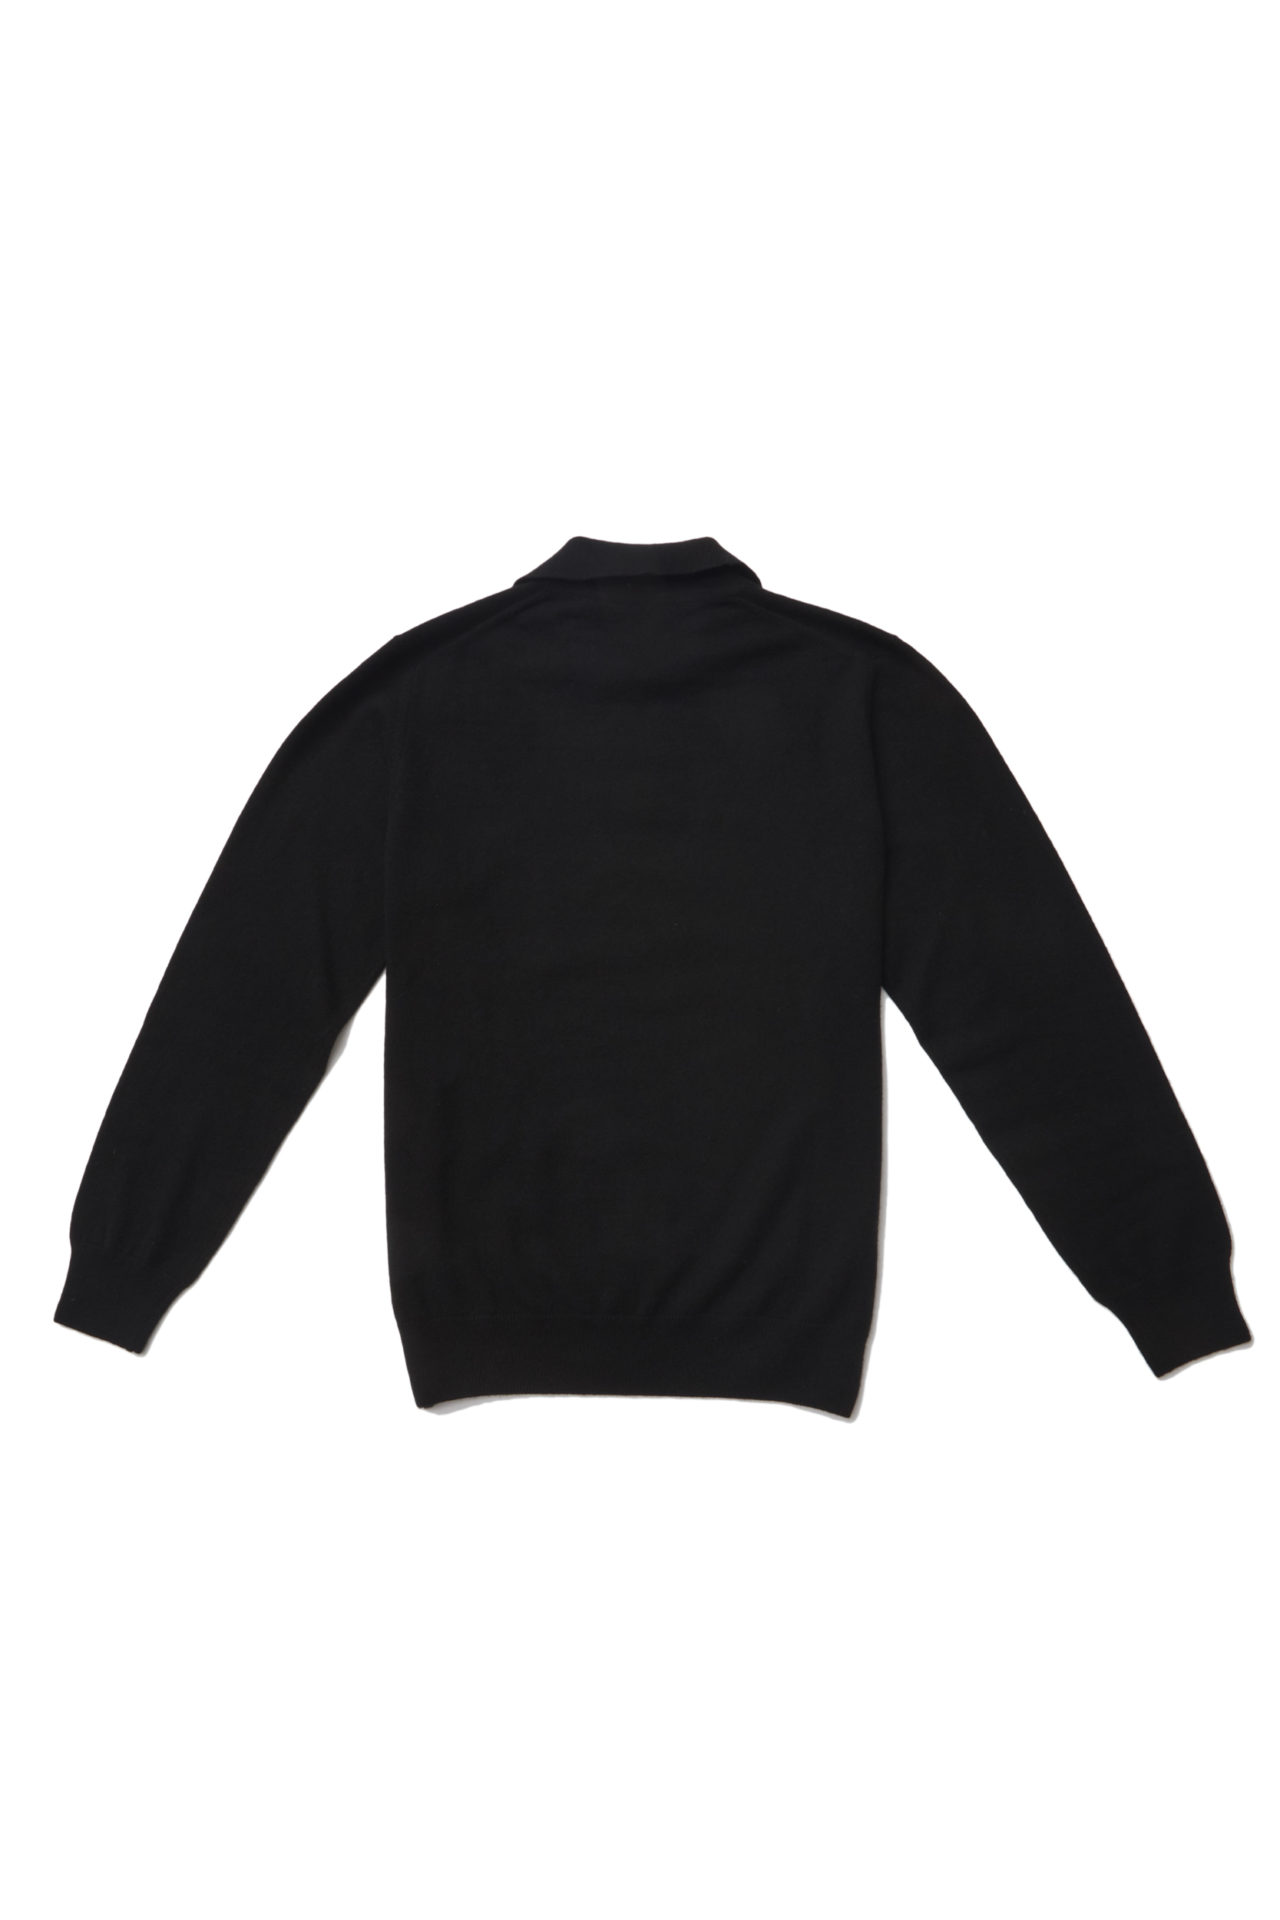 P.P.P. Black Cashmere Polo Shirt - Barbanera